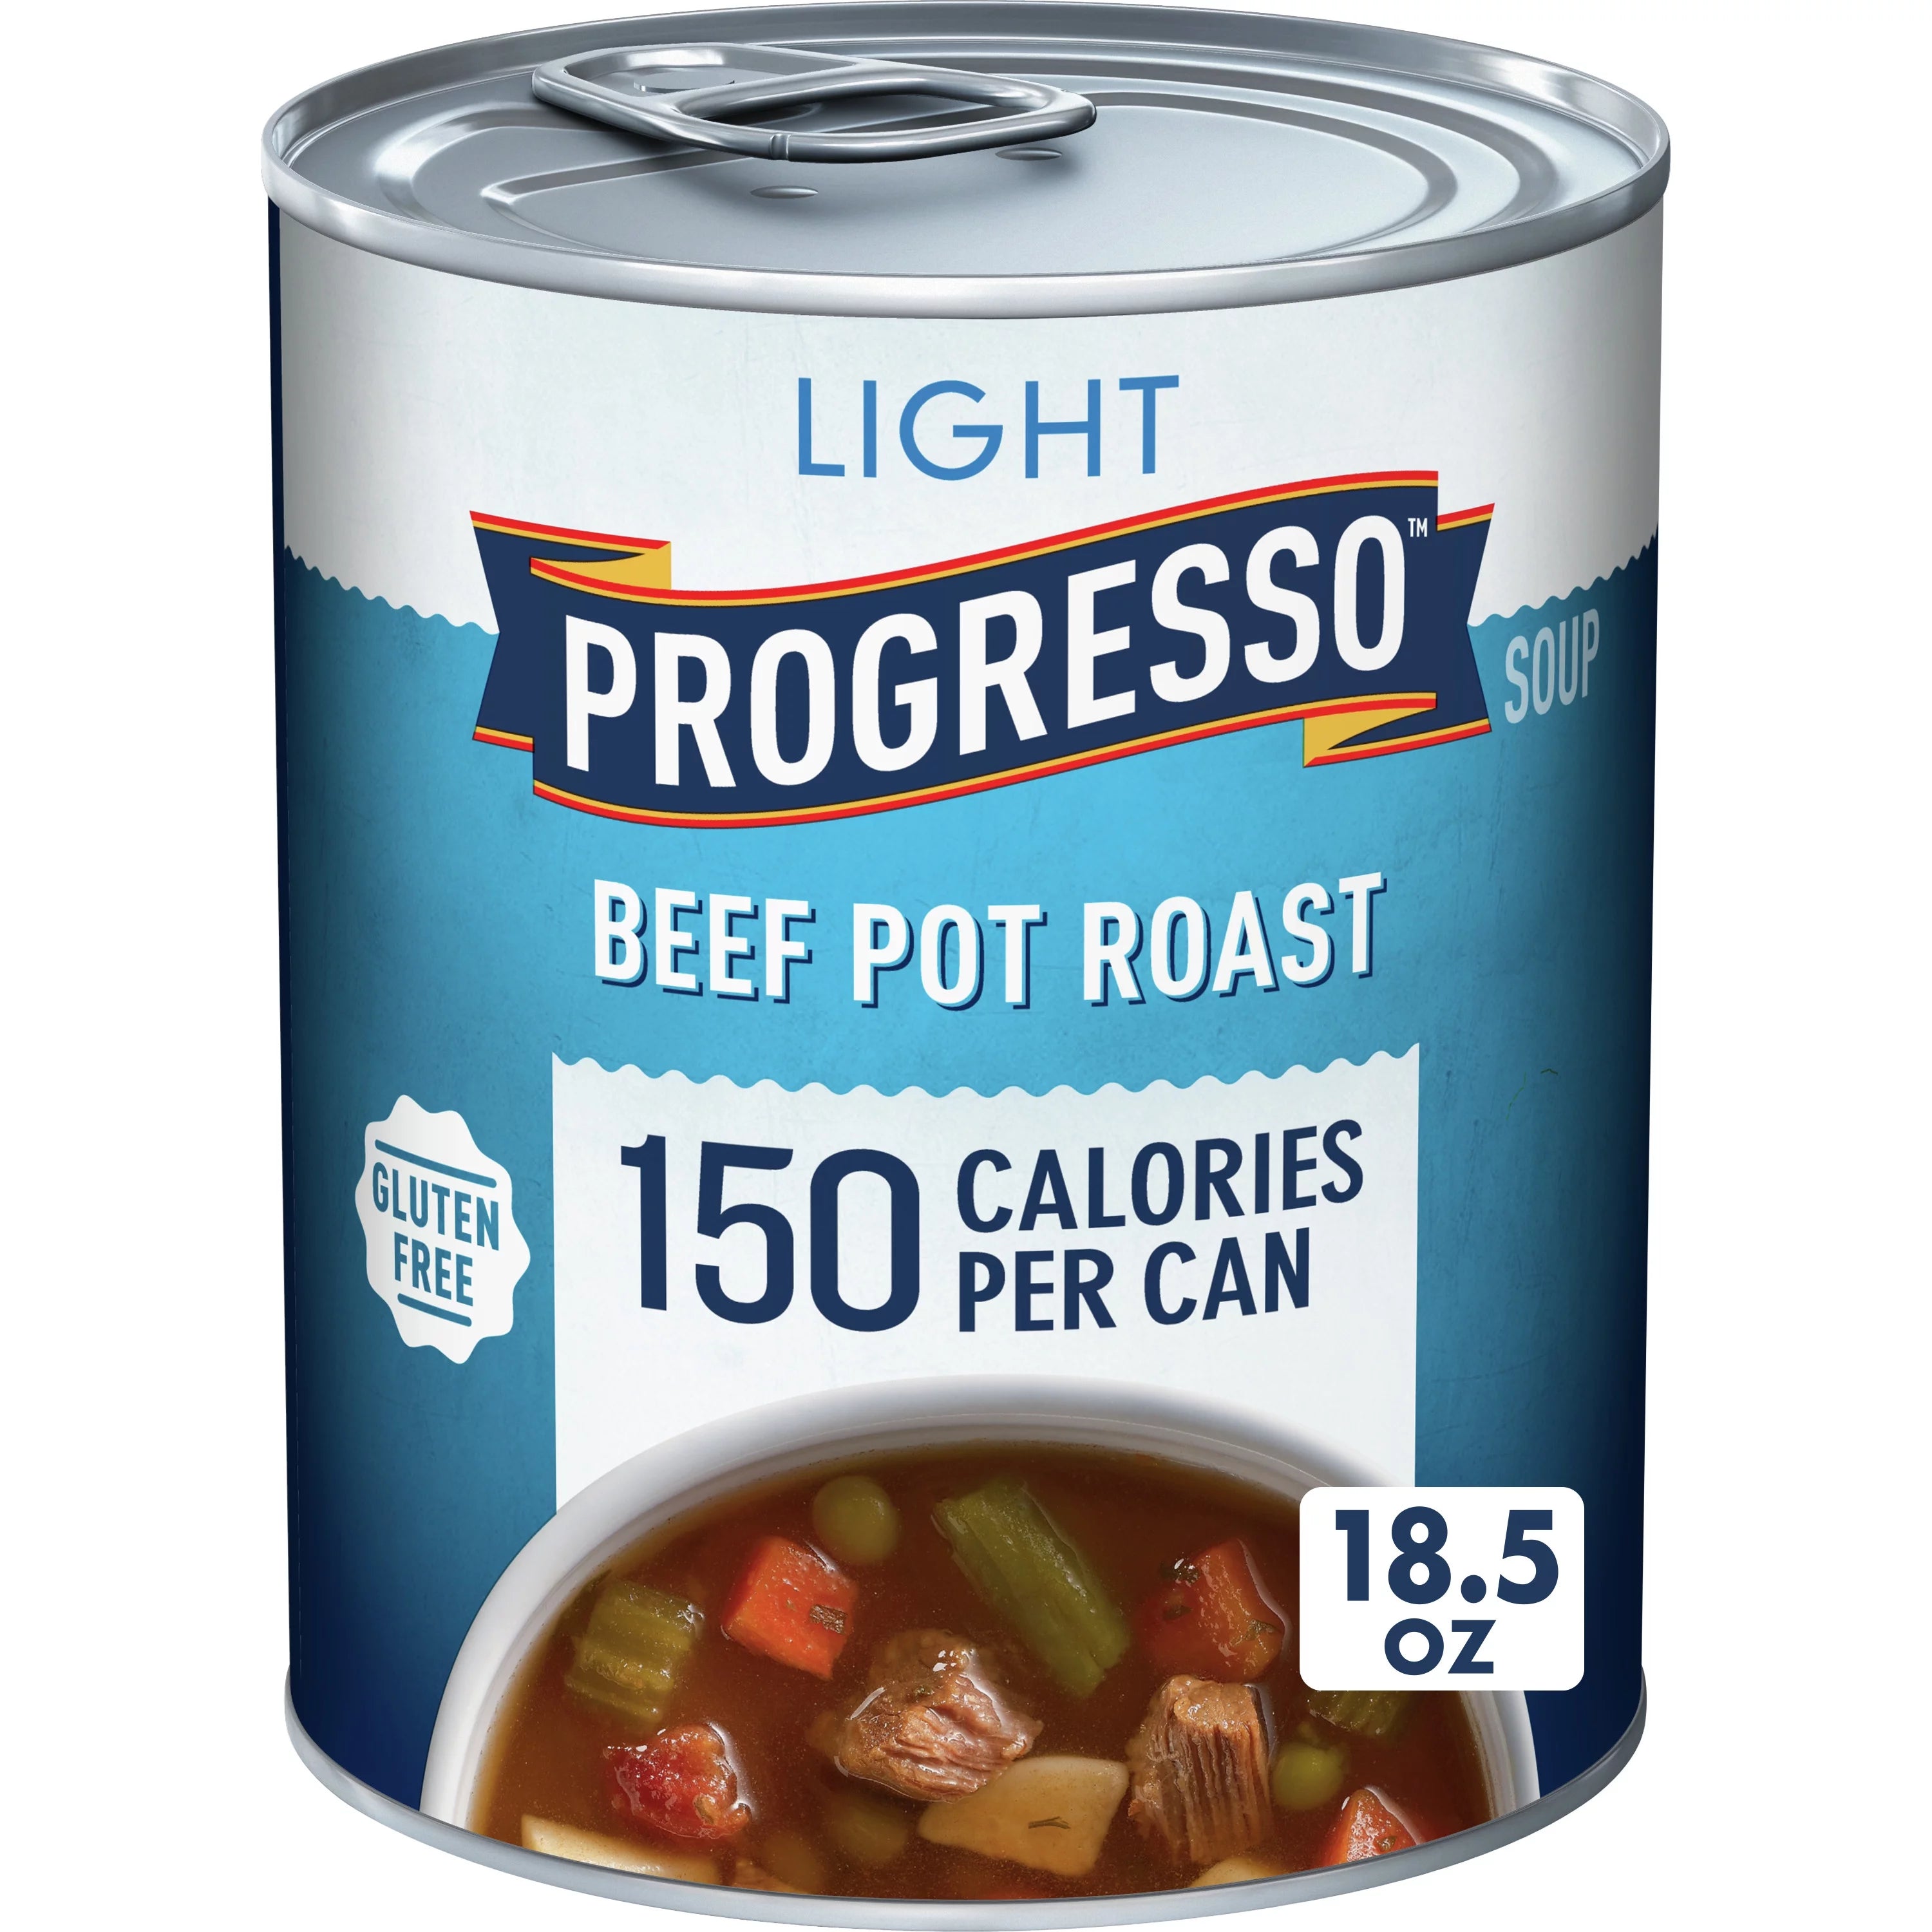 Progresso Light Beef Pot Roast Soup, 18.5 OZ